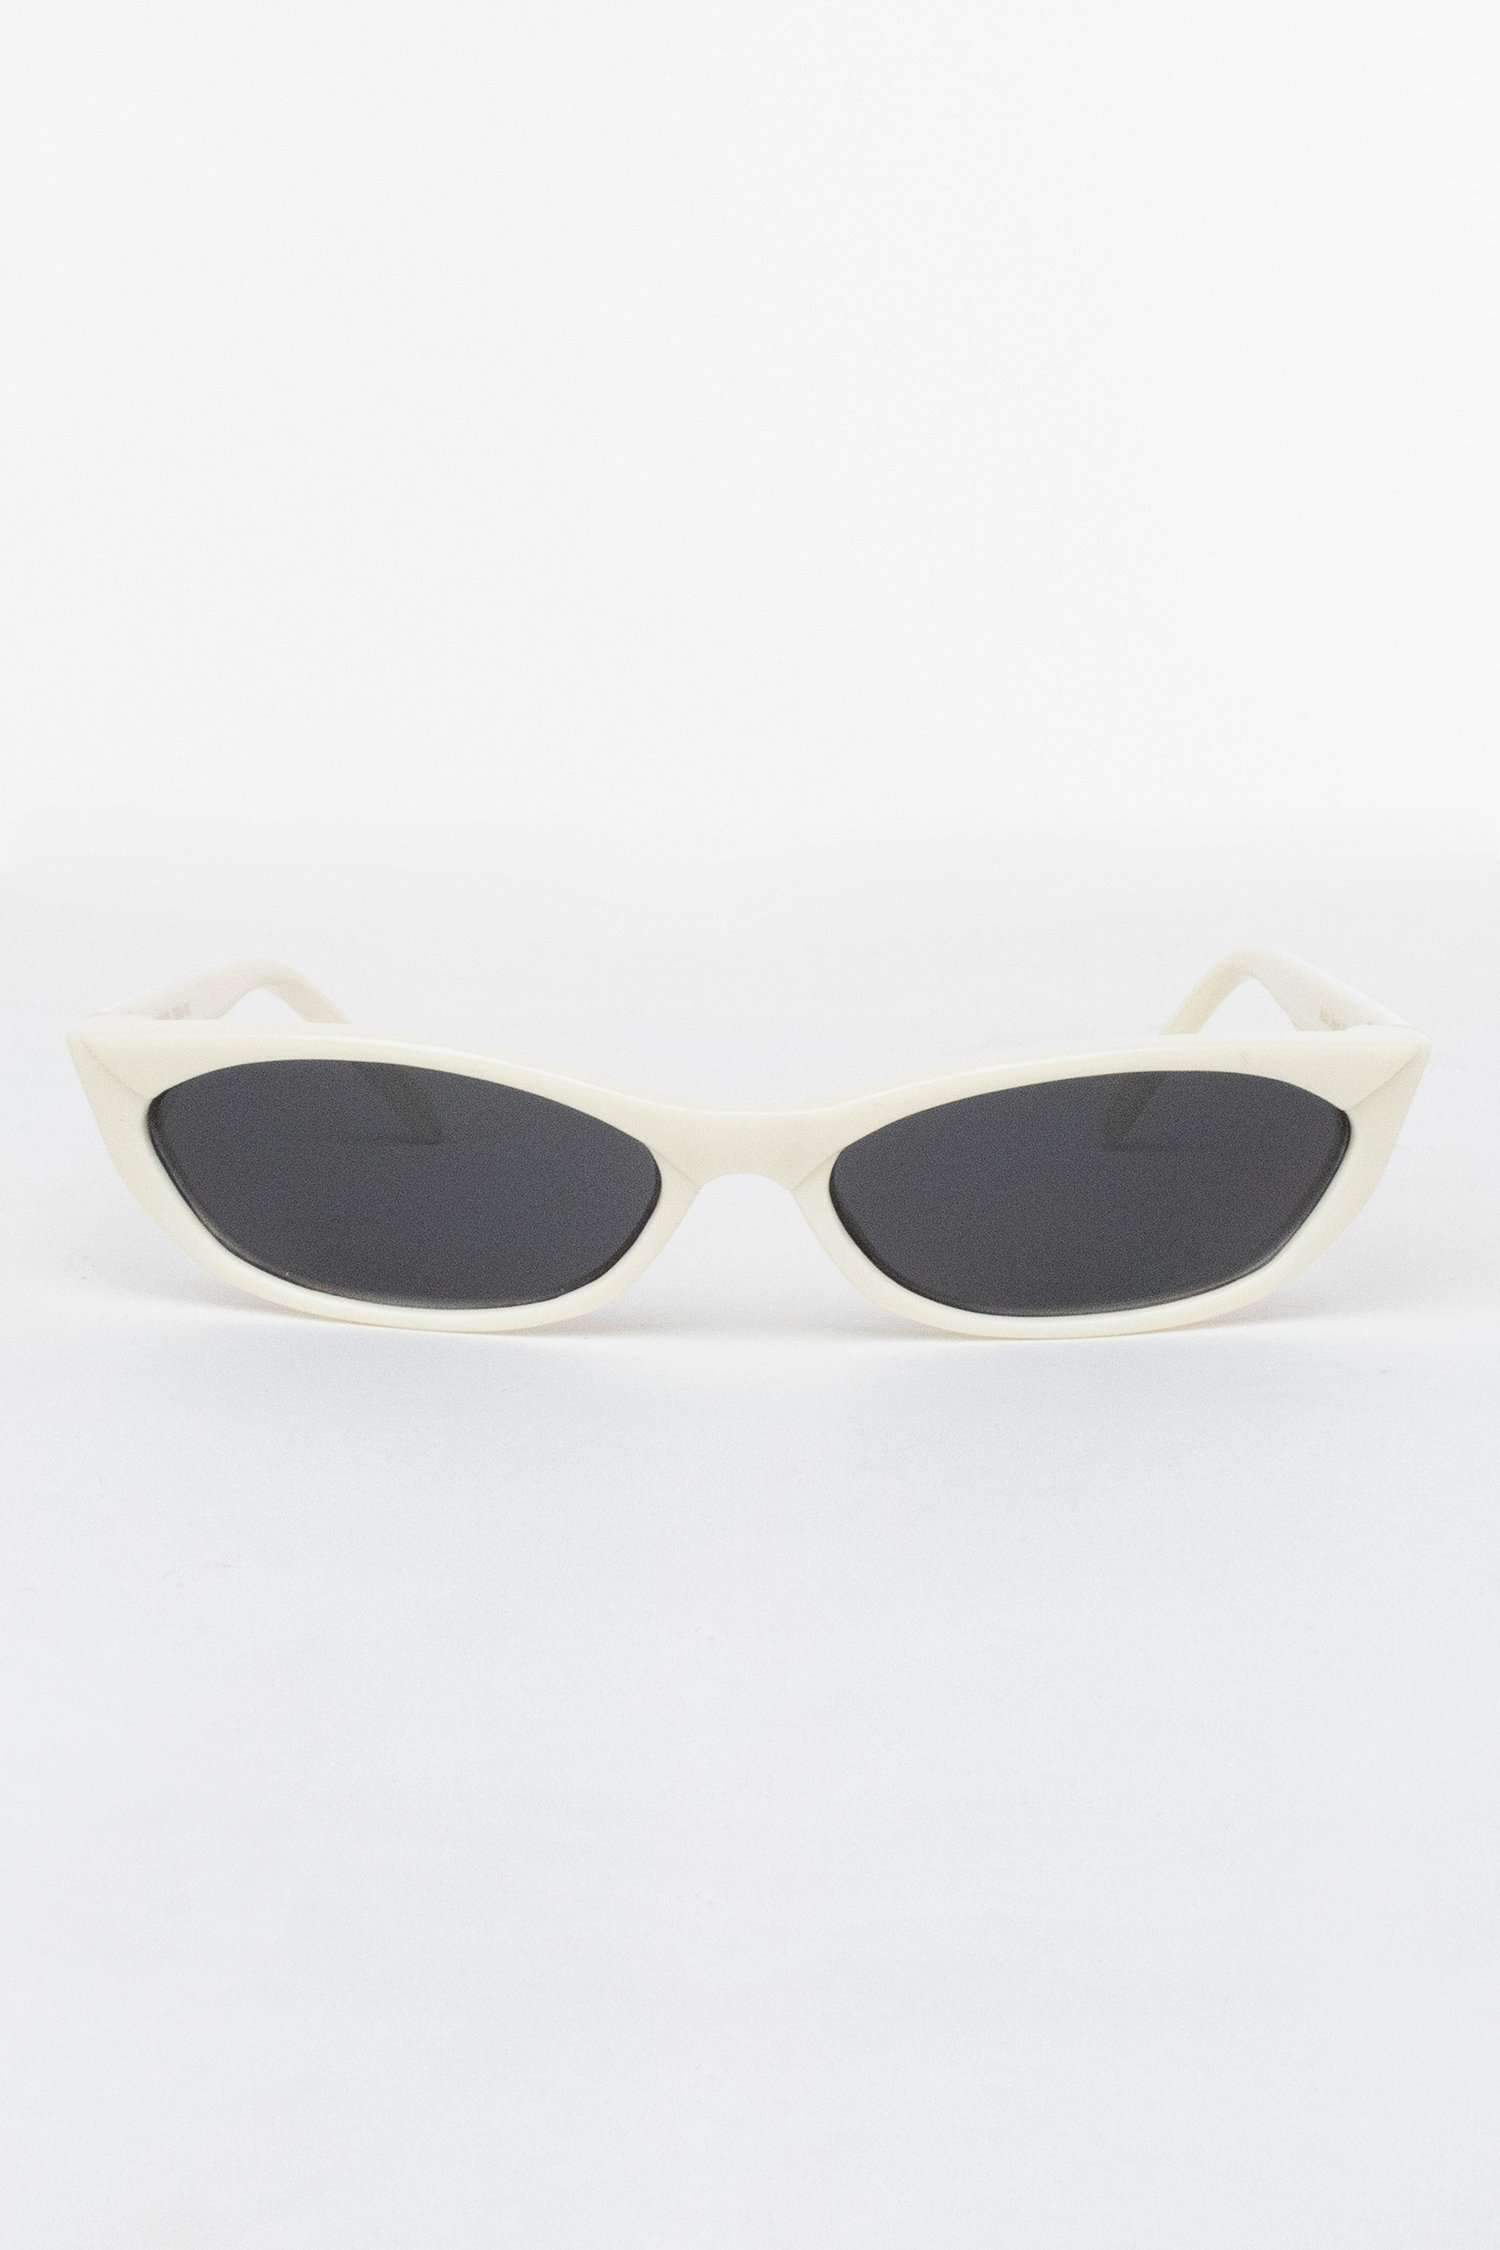 SGSKCAT - Katya Skinny Cat Eye Sunglasses Sunglasses Los Angeles Apparel Off White OS 